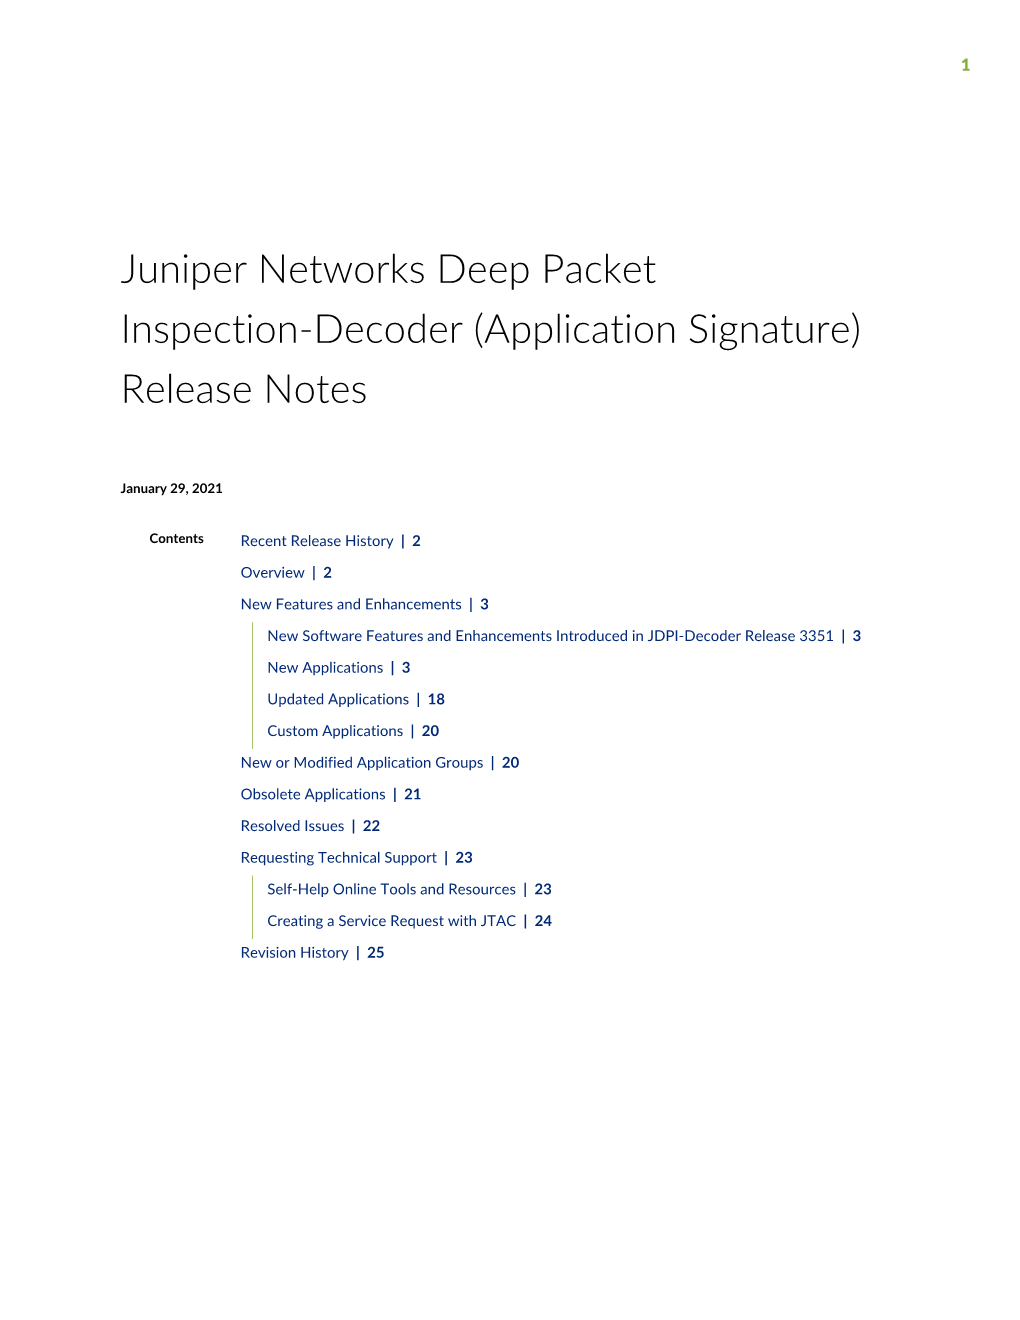 Juniper Networks Deep Packet Inspection-Decoder (Application Signature) Release Notes